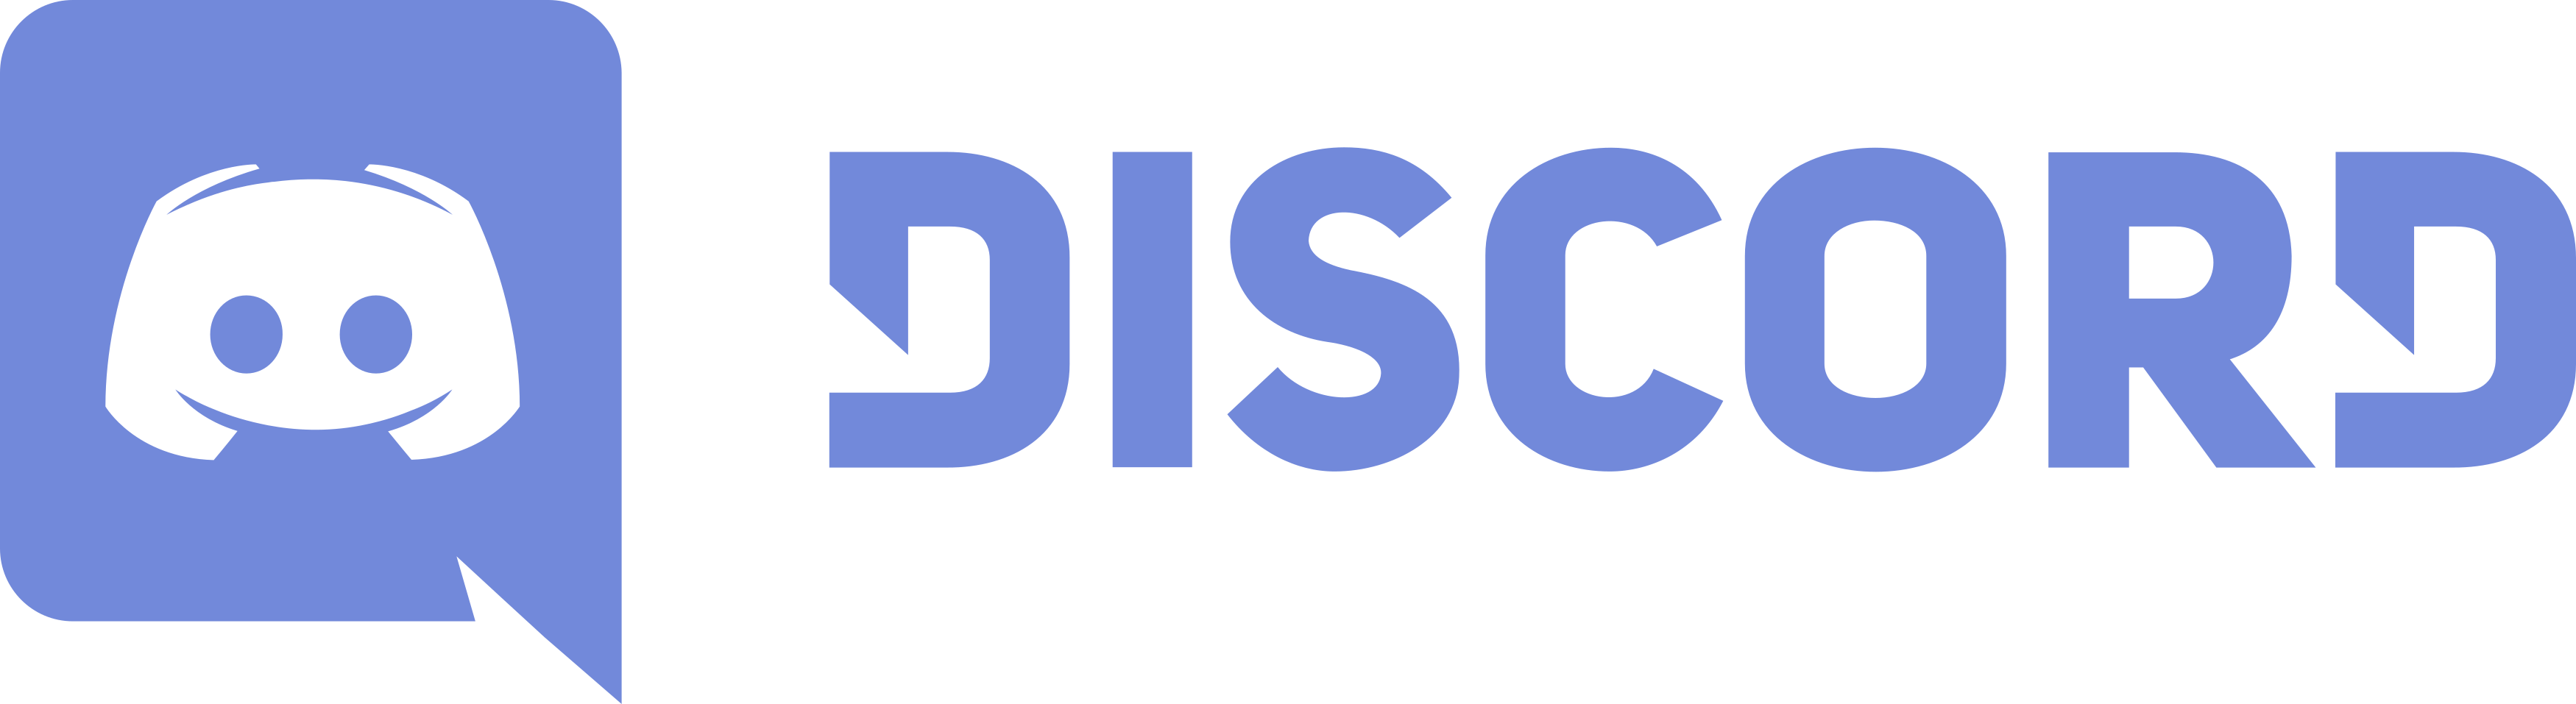 Riverside Locos 13 Discord-logo